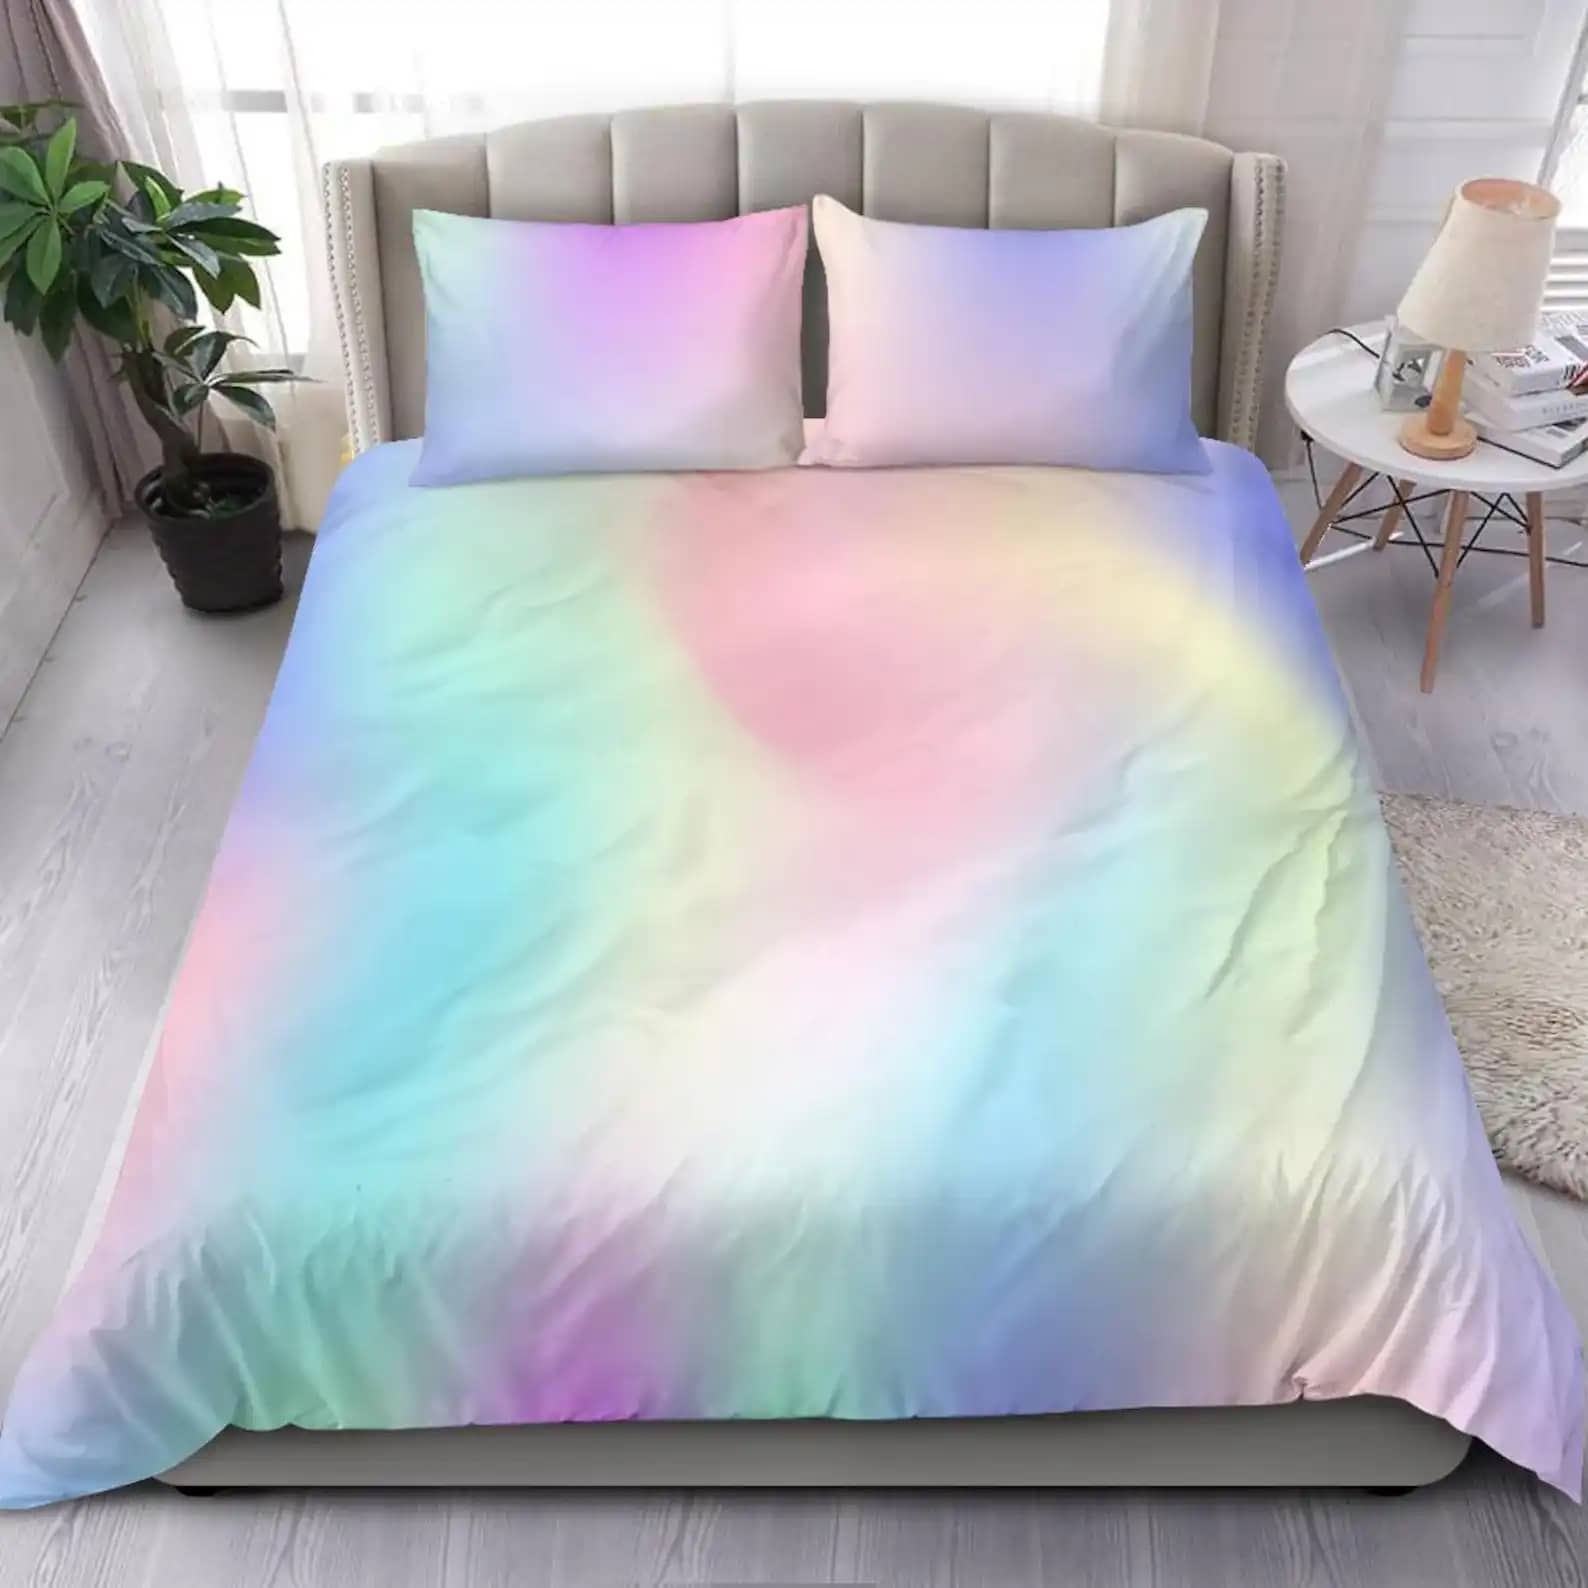 Fluid Artist For A Rainbow Bedroom Decor Quilt Bedding Sets